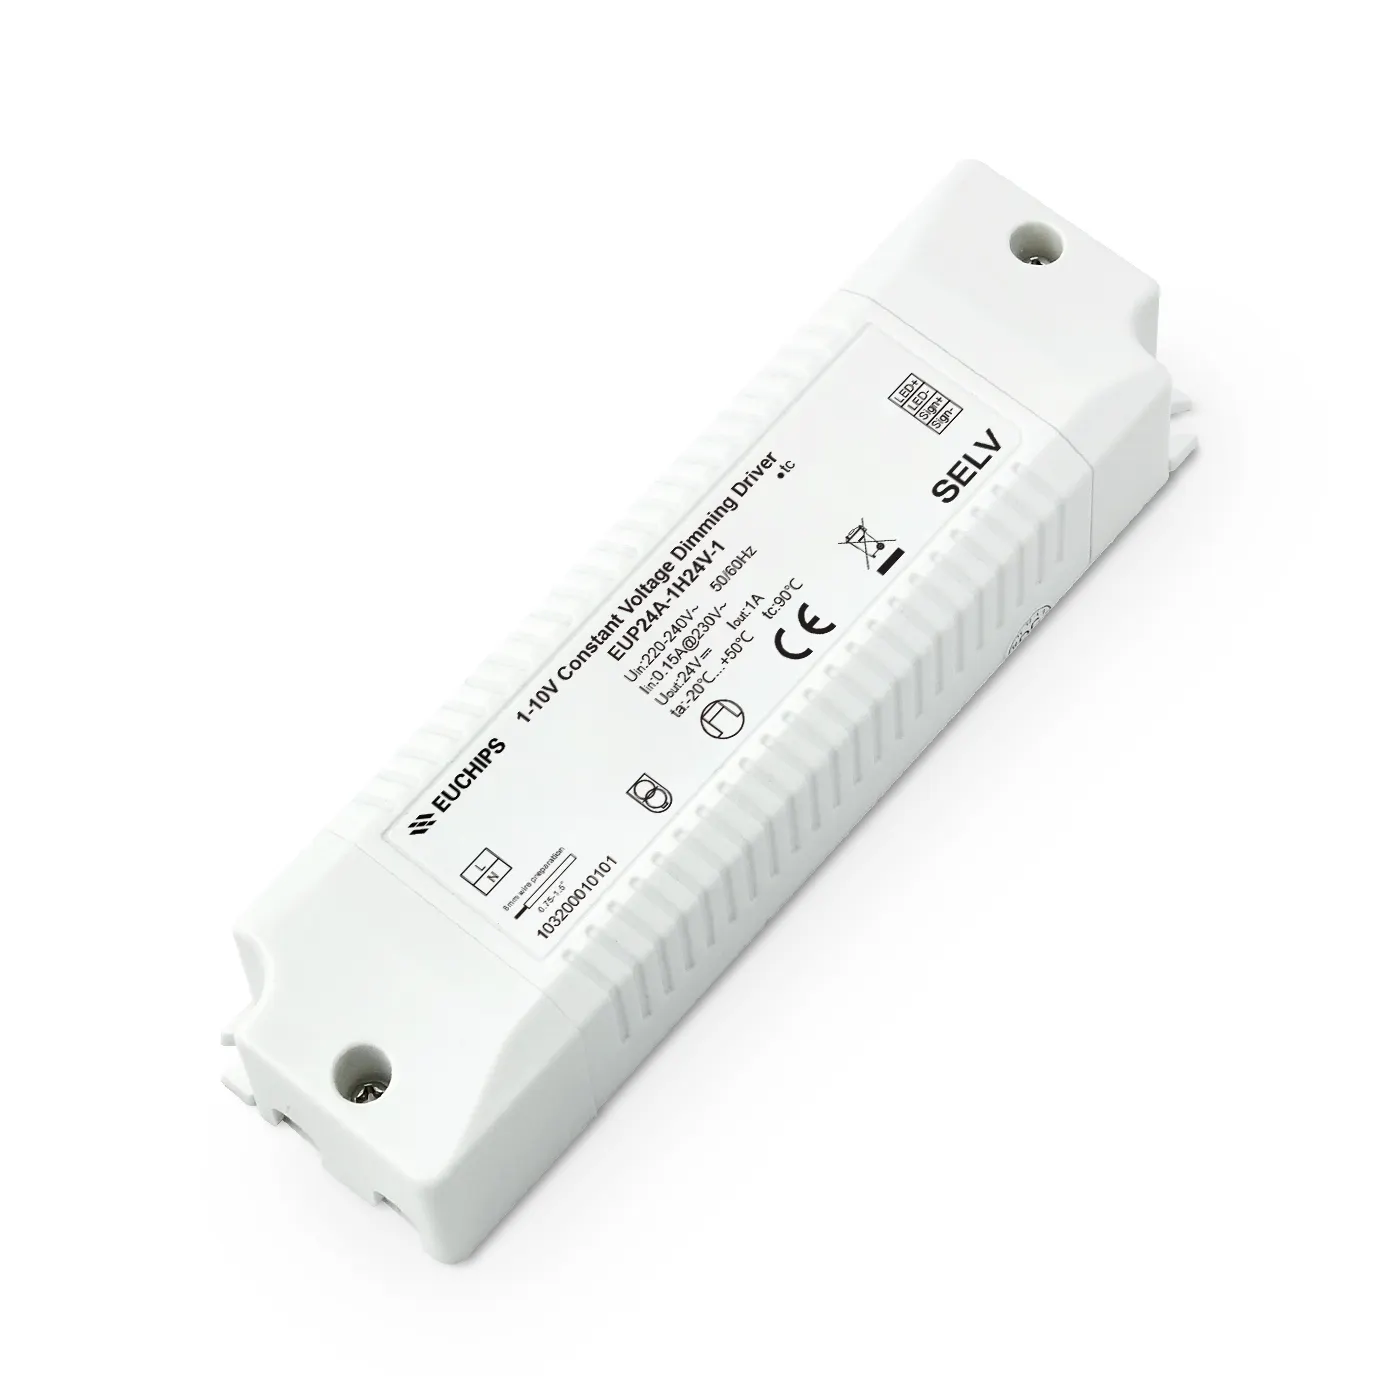 Euchips Original Hochwertiger LED-Streifen licht treiber Konstant spannung LED dimmbarer 24W 0-10V-Treiber